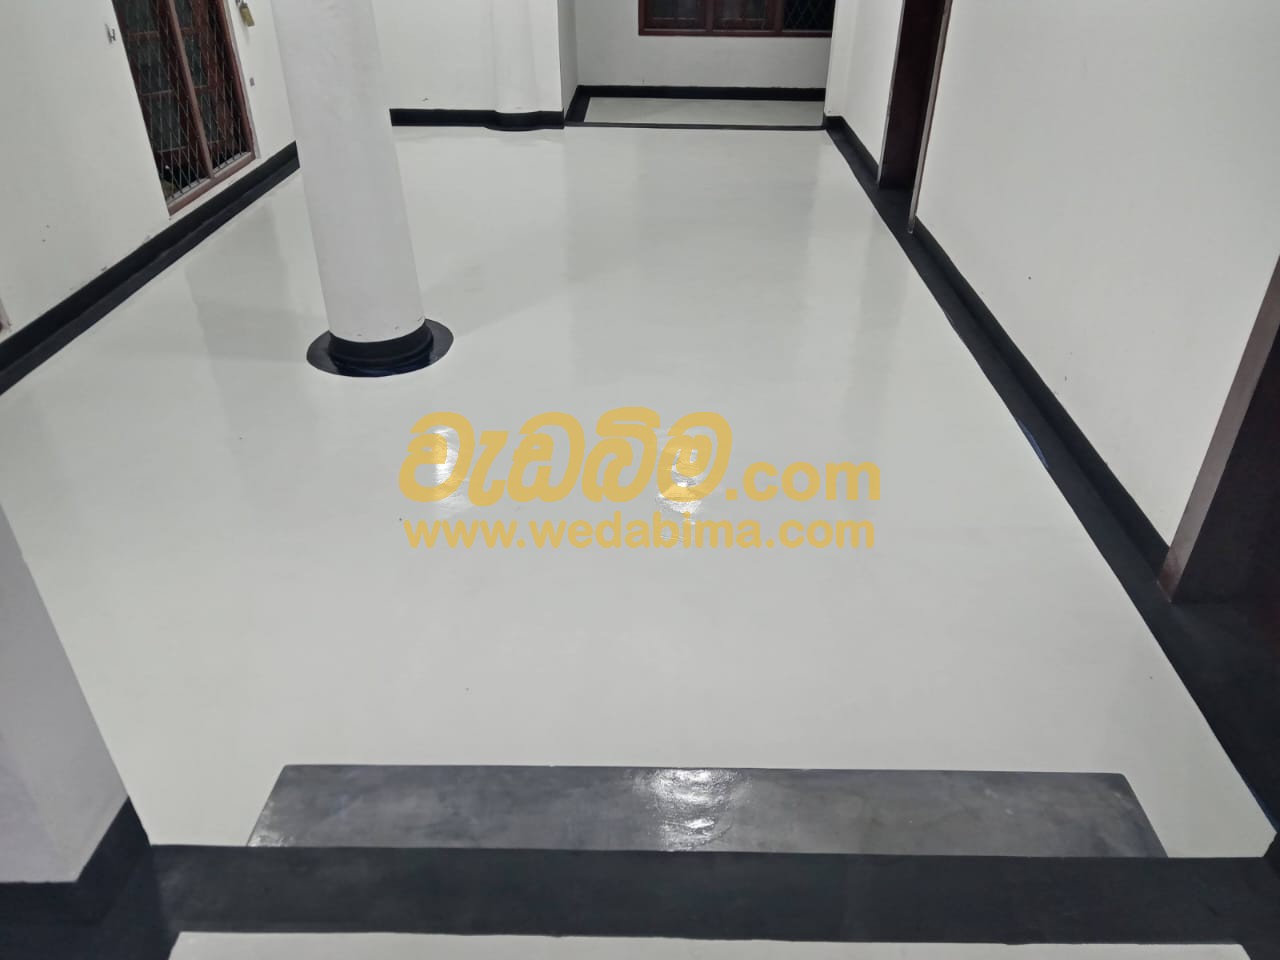 Titanium Cut Cement Floors Sri Lanka